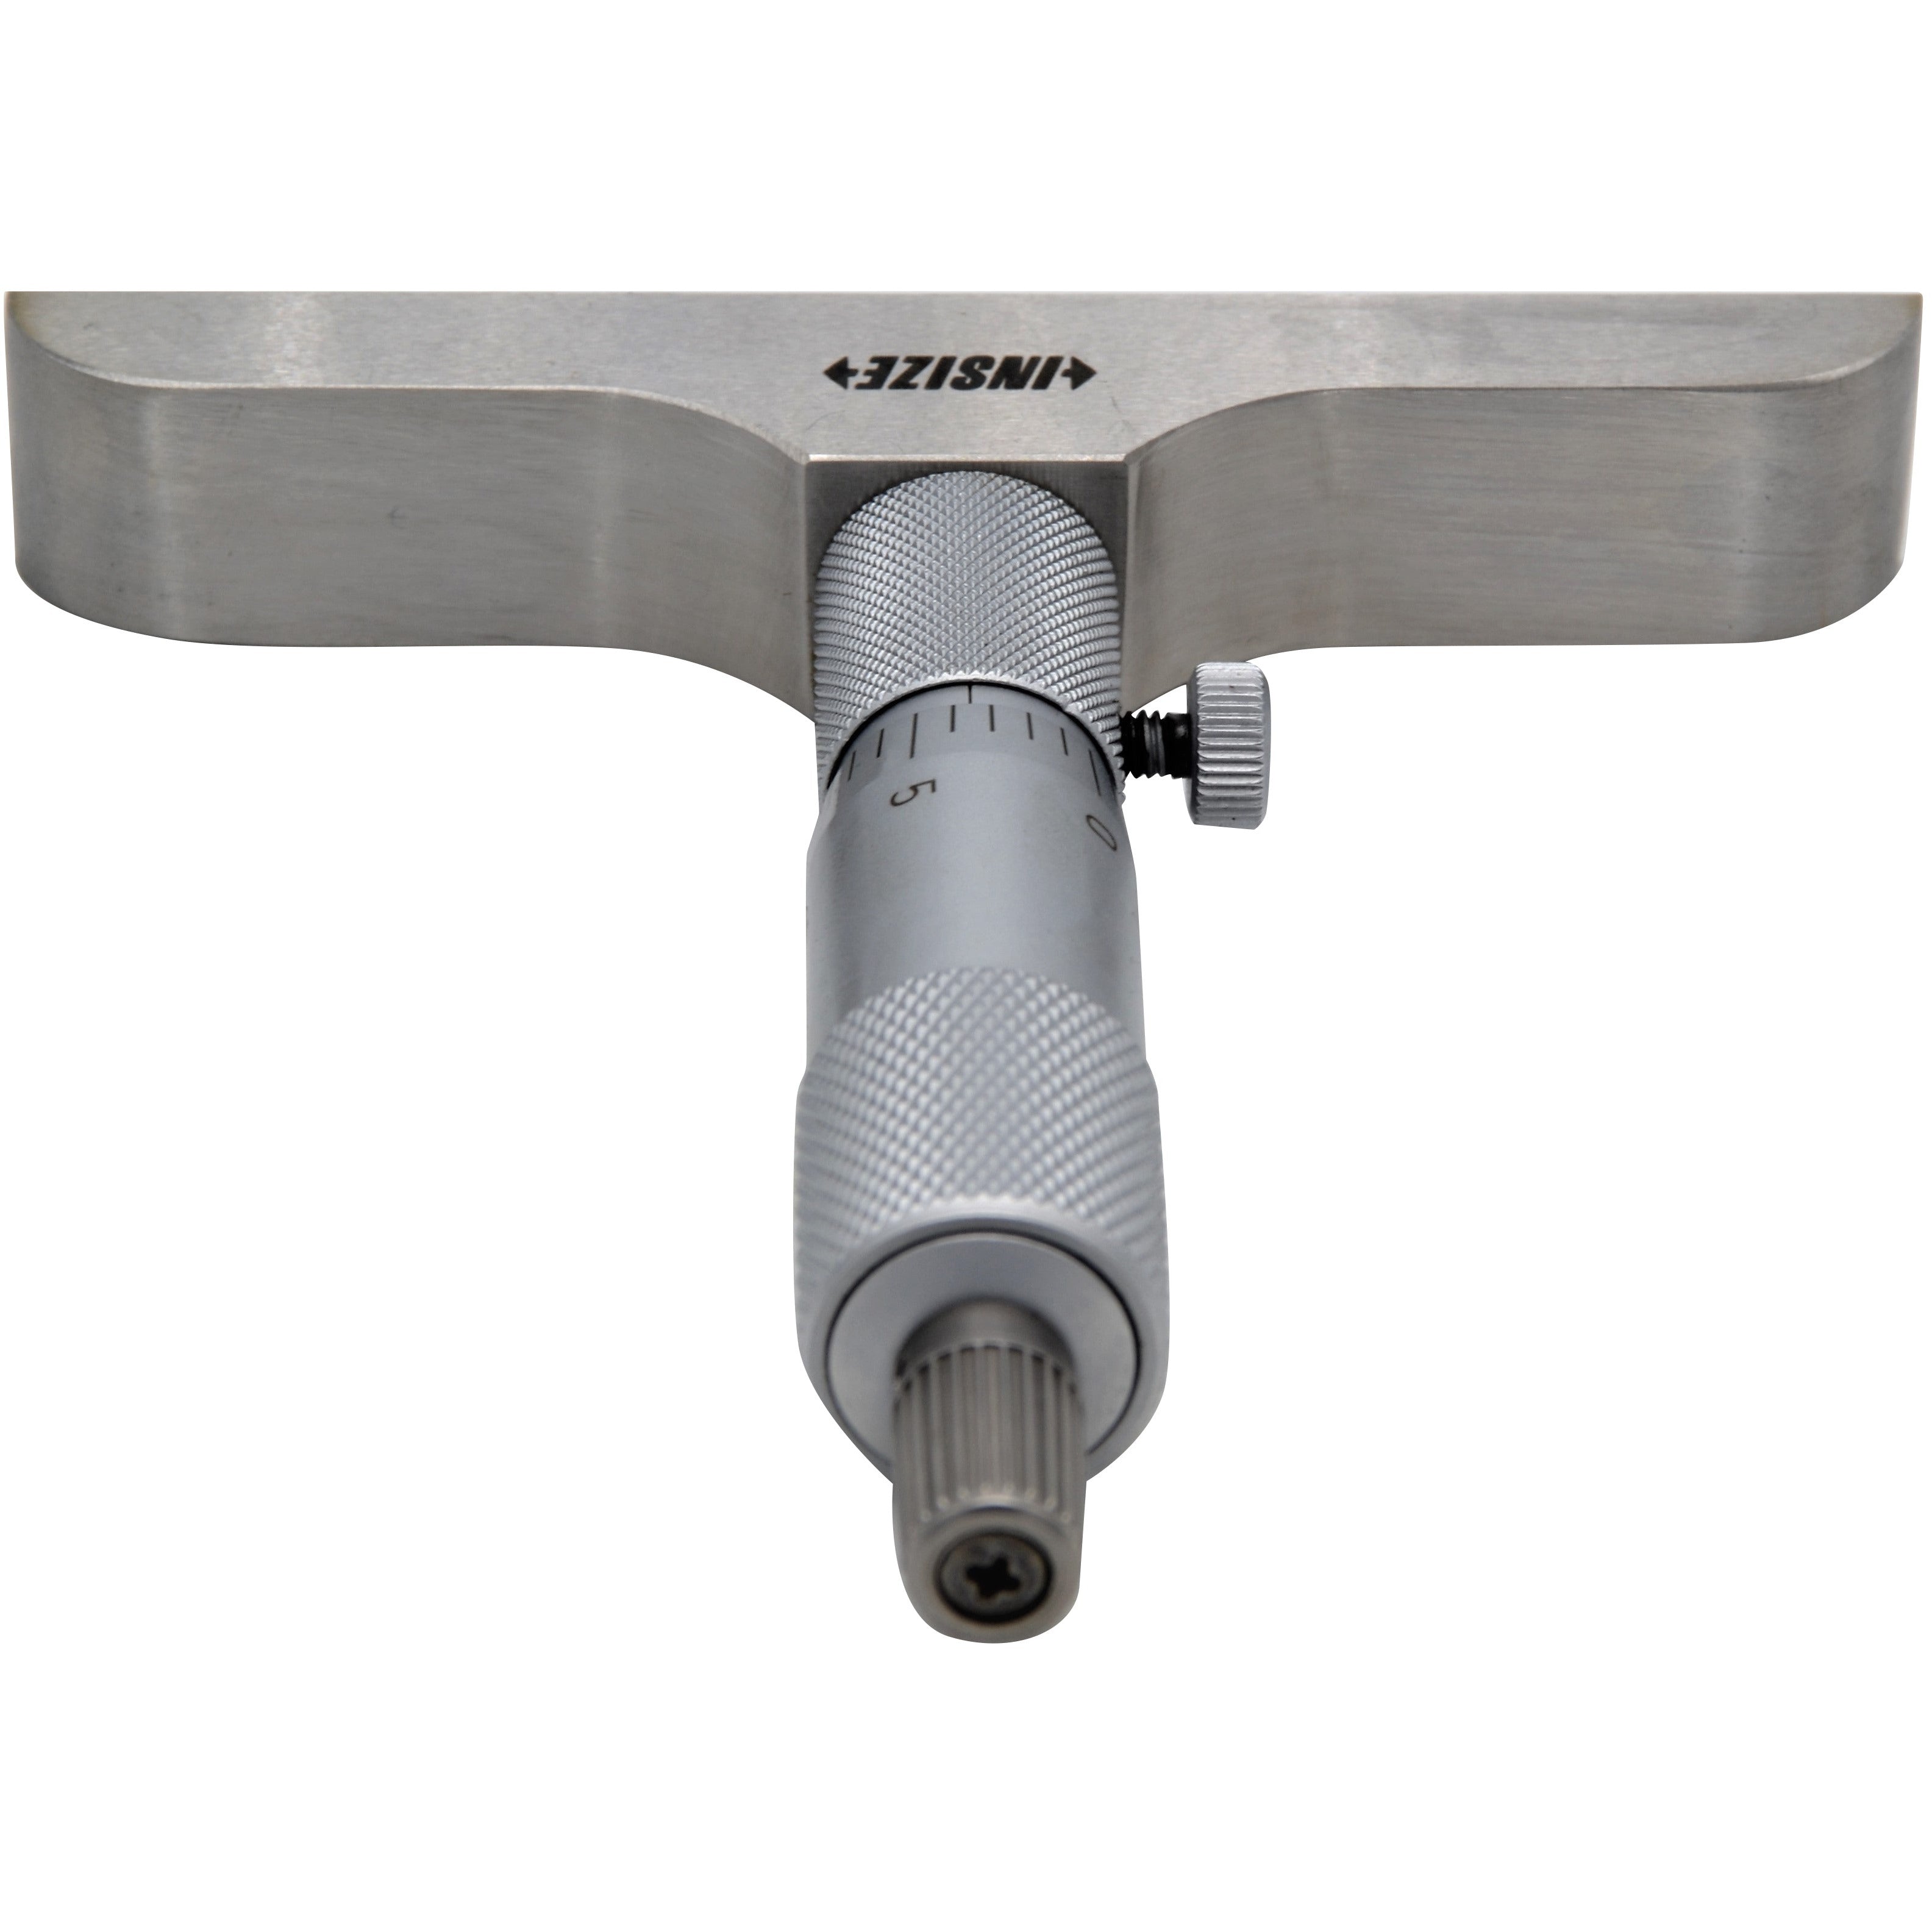 Insize Imperial Depth Micrometer 0-1" Range Series 3240 - 1